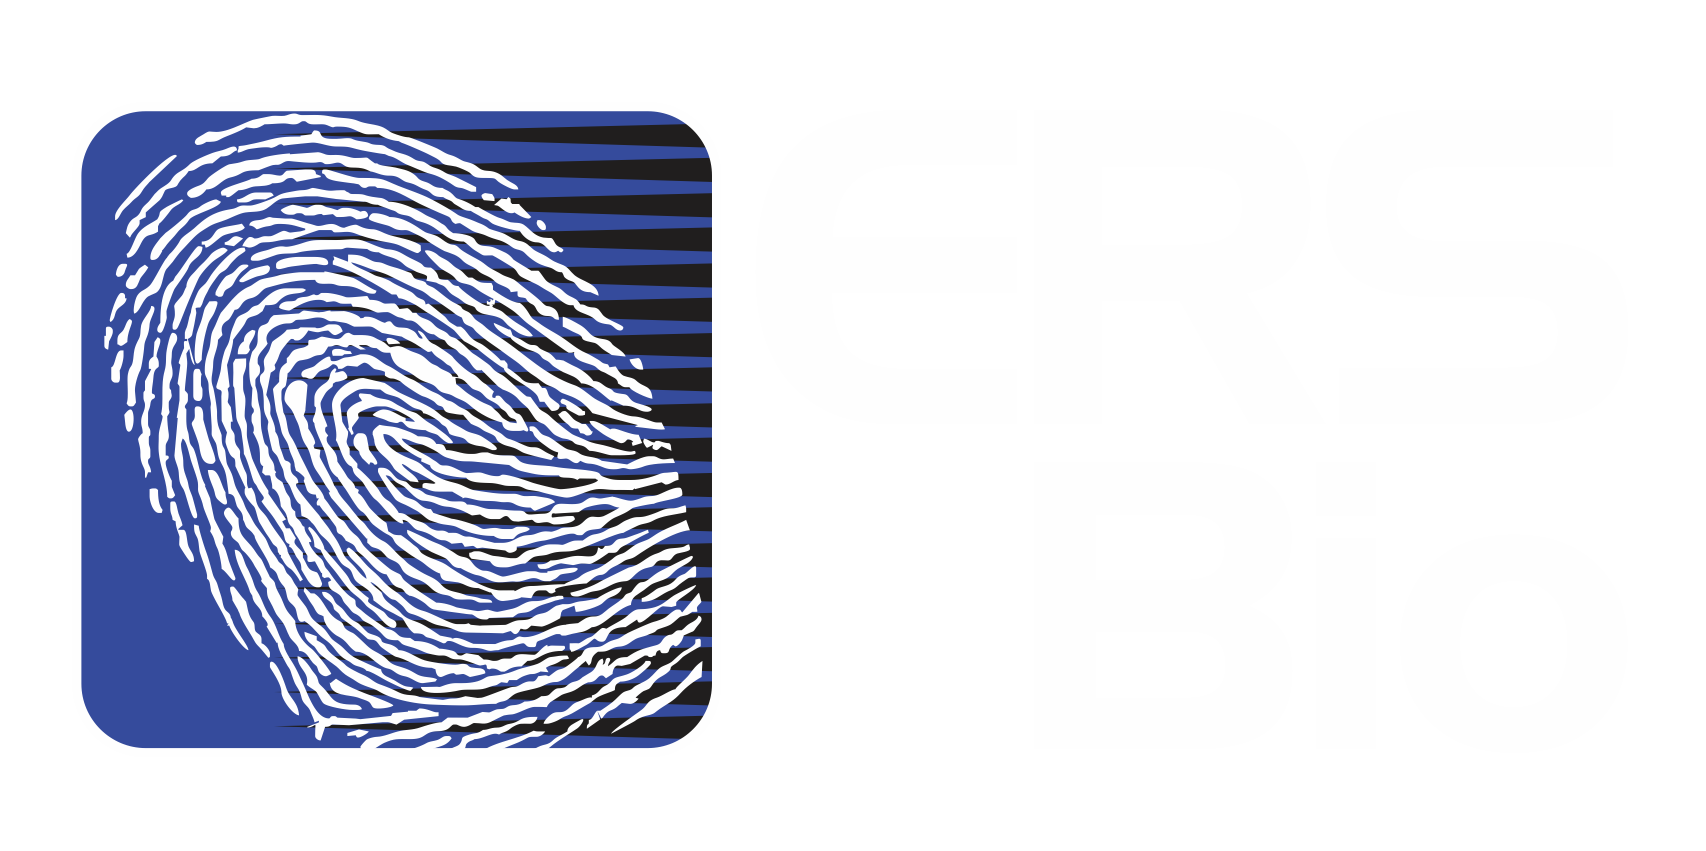 ERSBio Logo White